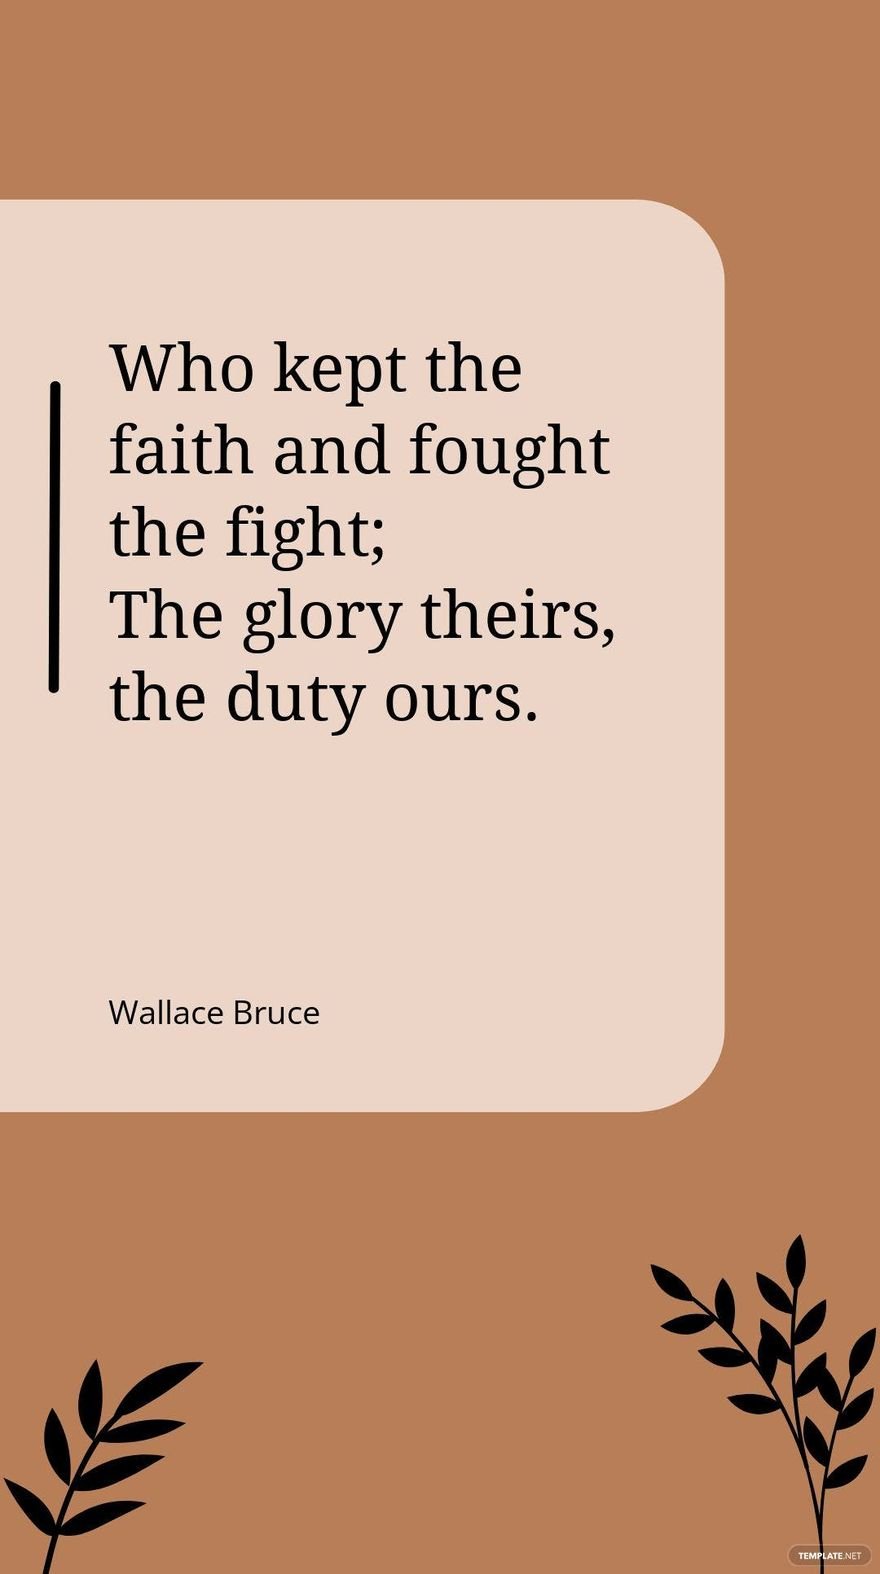 Wallace Bruce - 